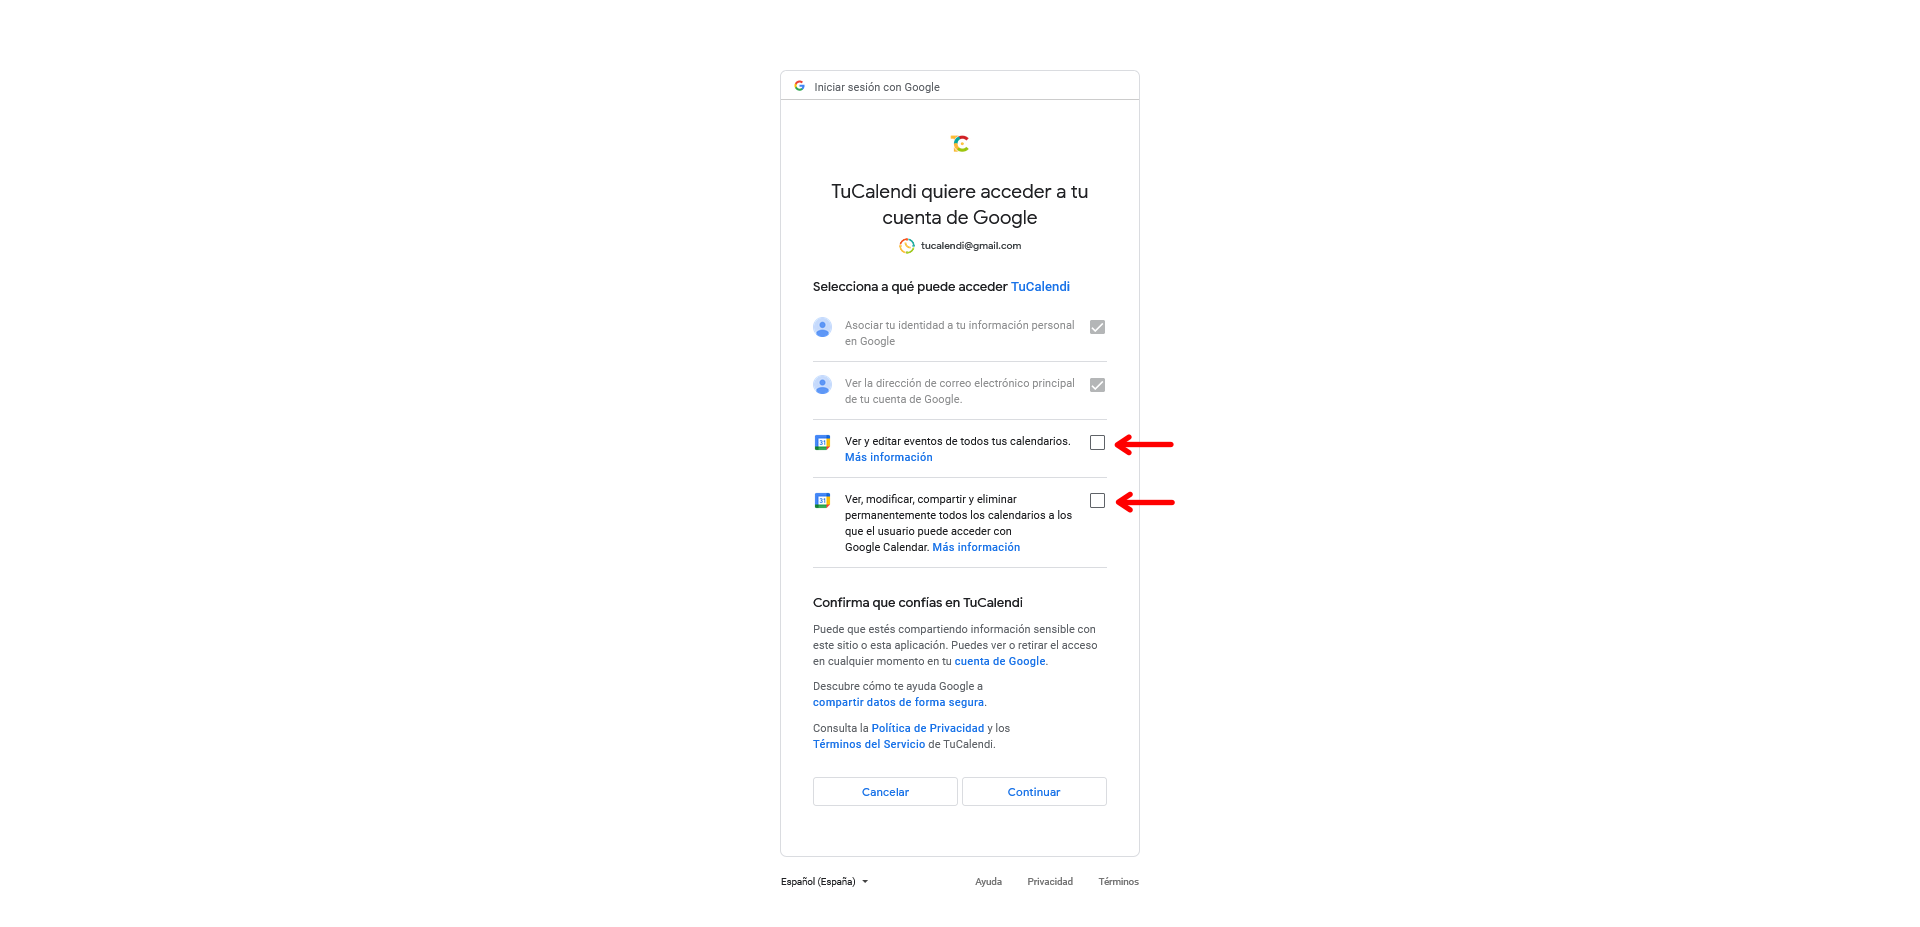 Permissions for Google Calendar integration